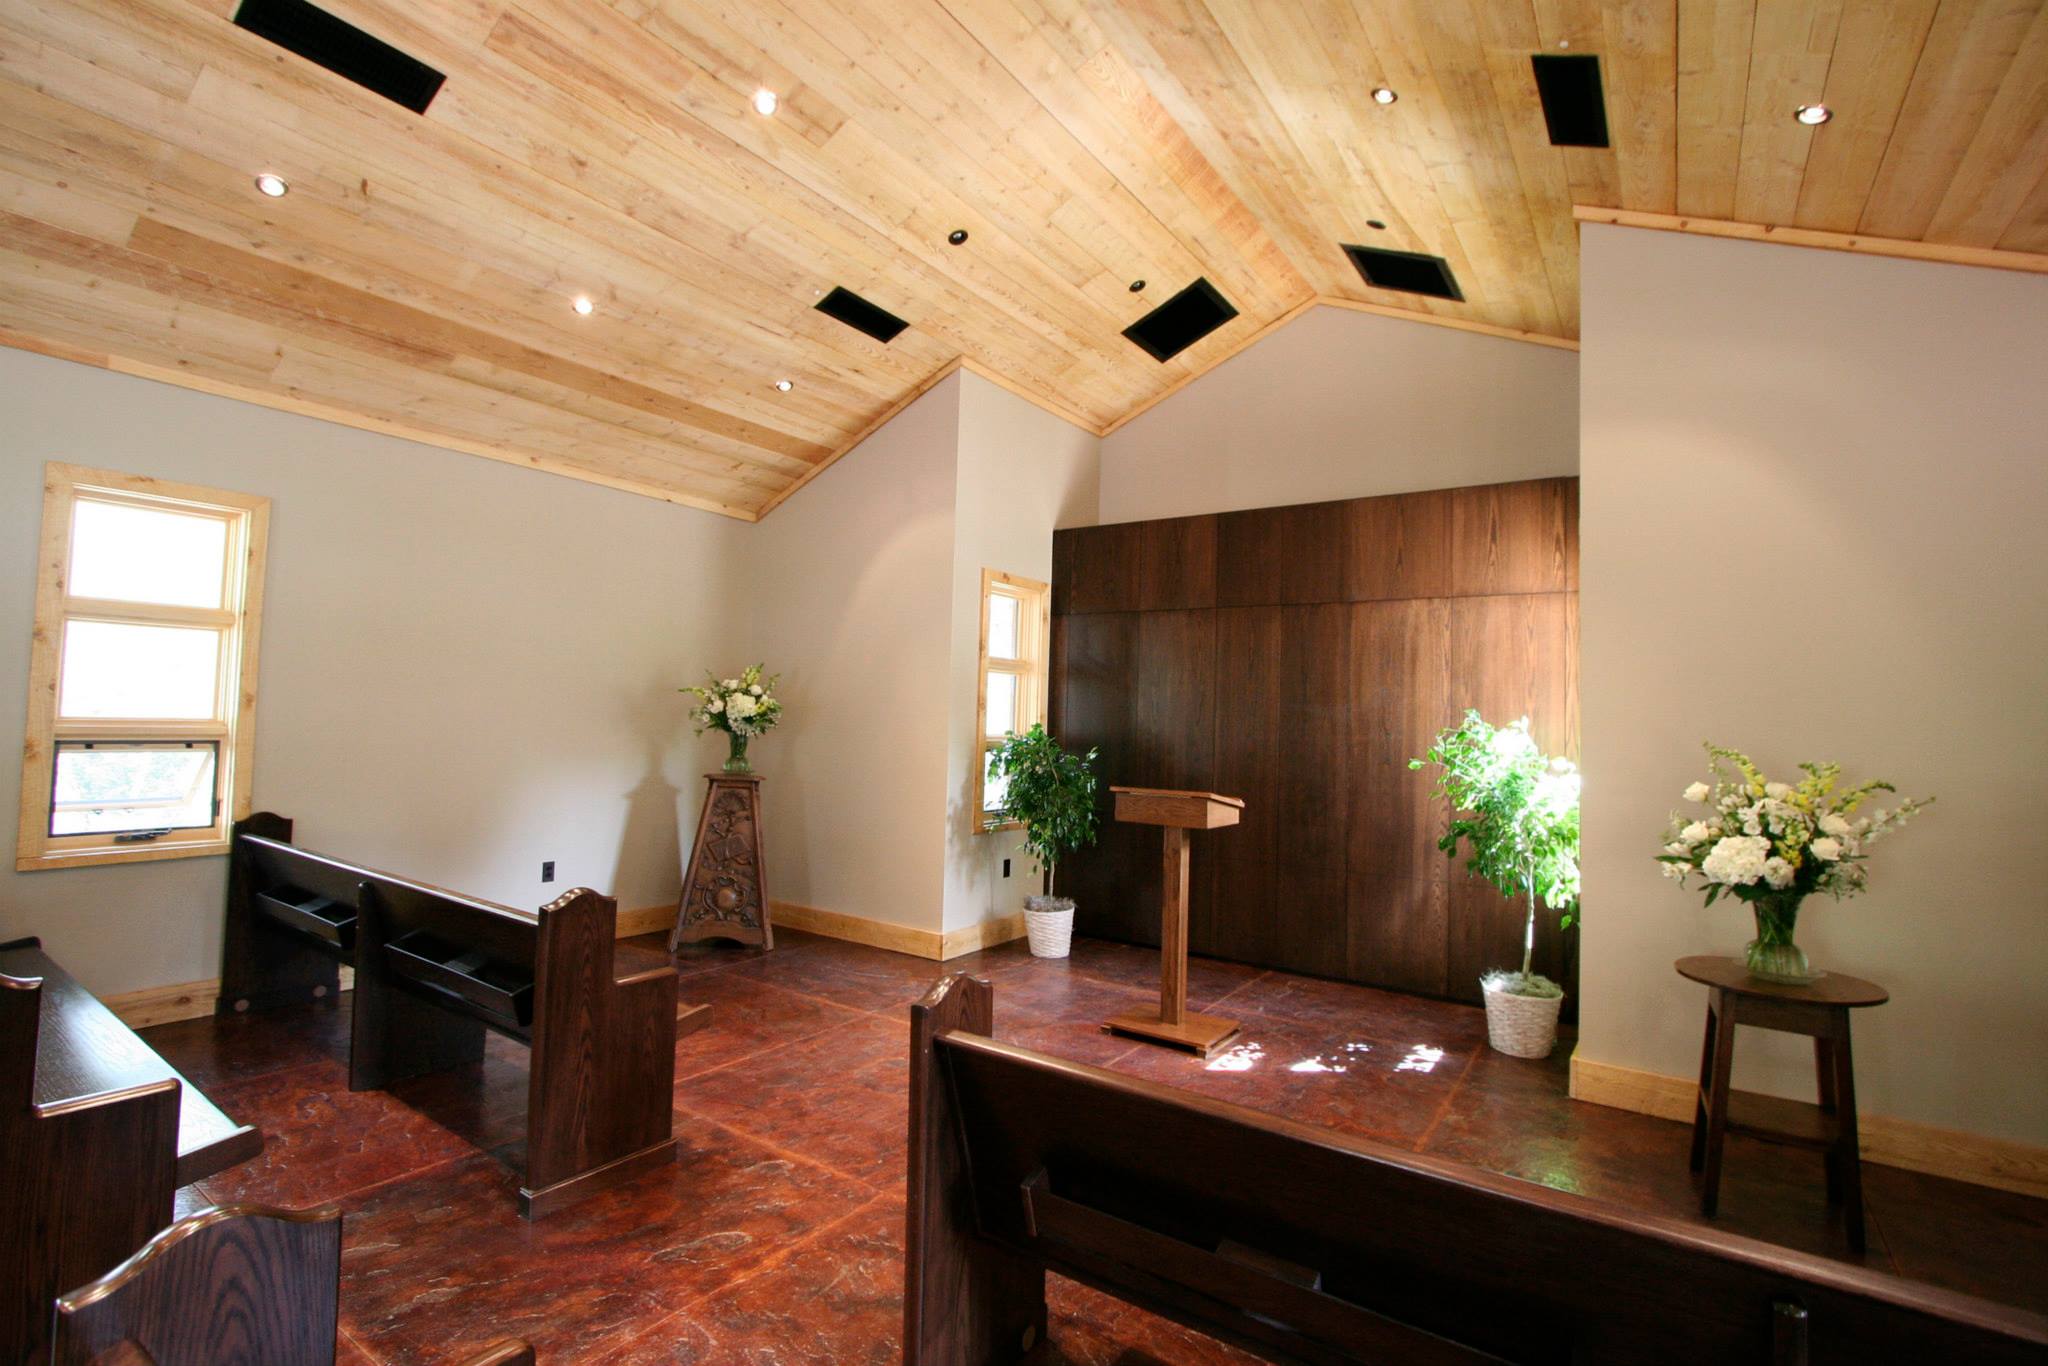  SMU-in-Taos chapel interior